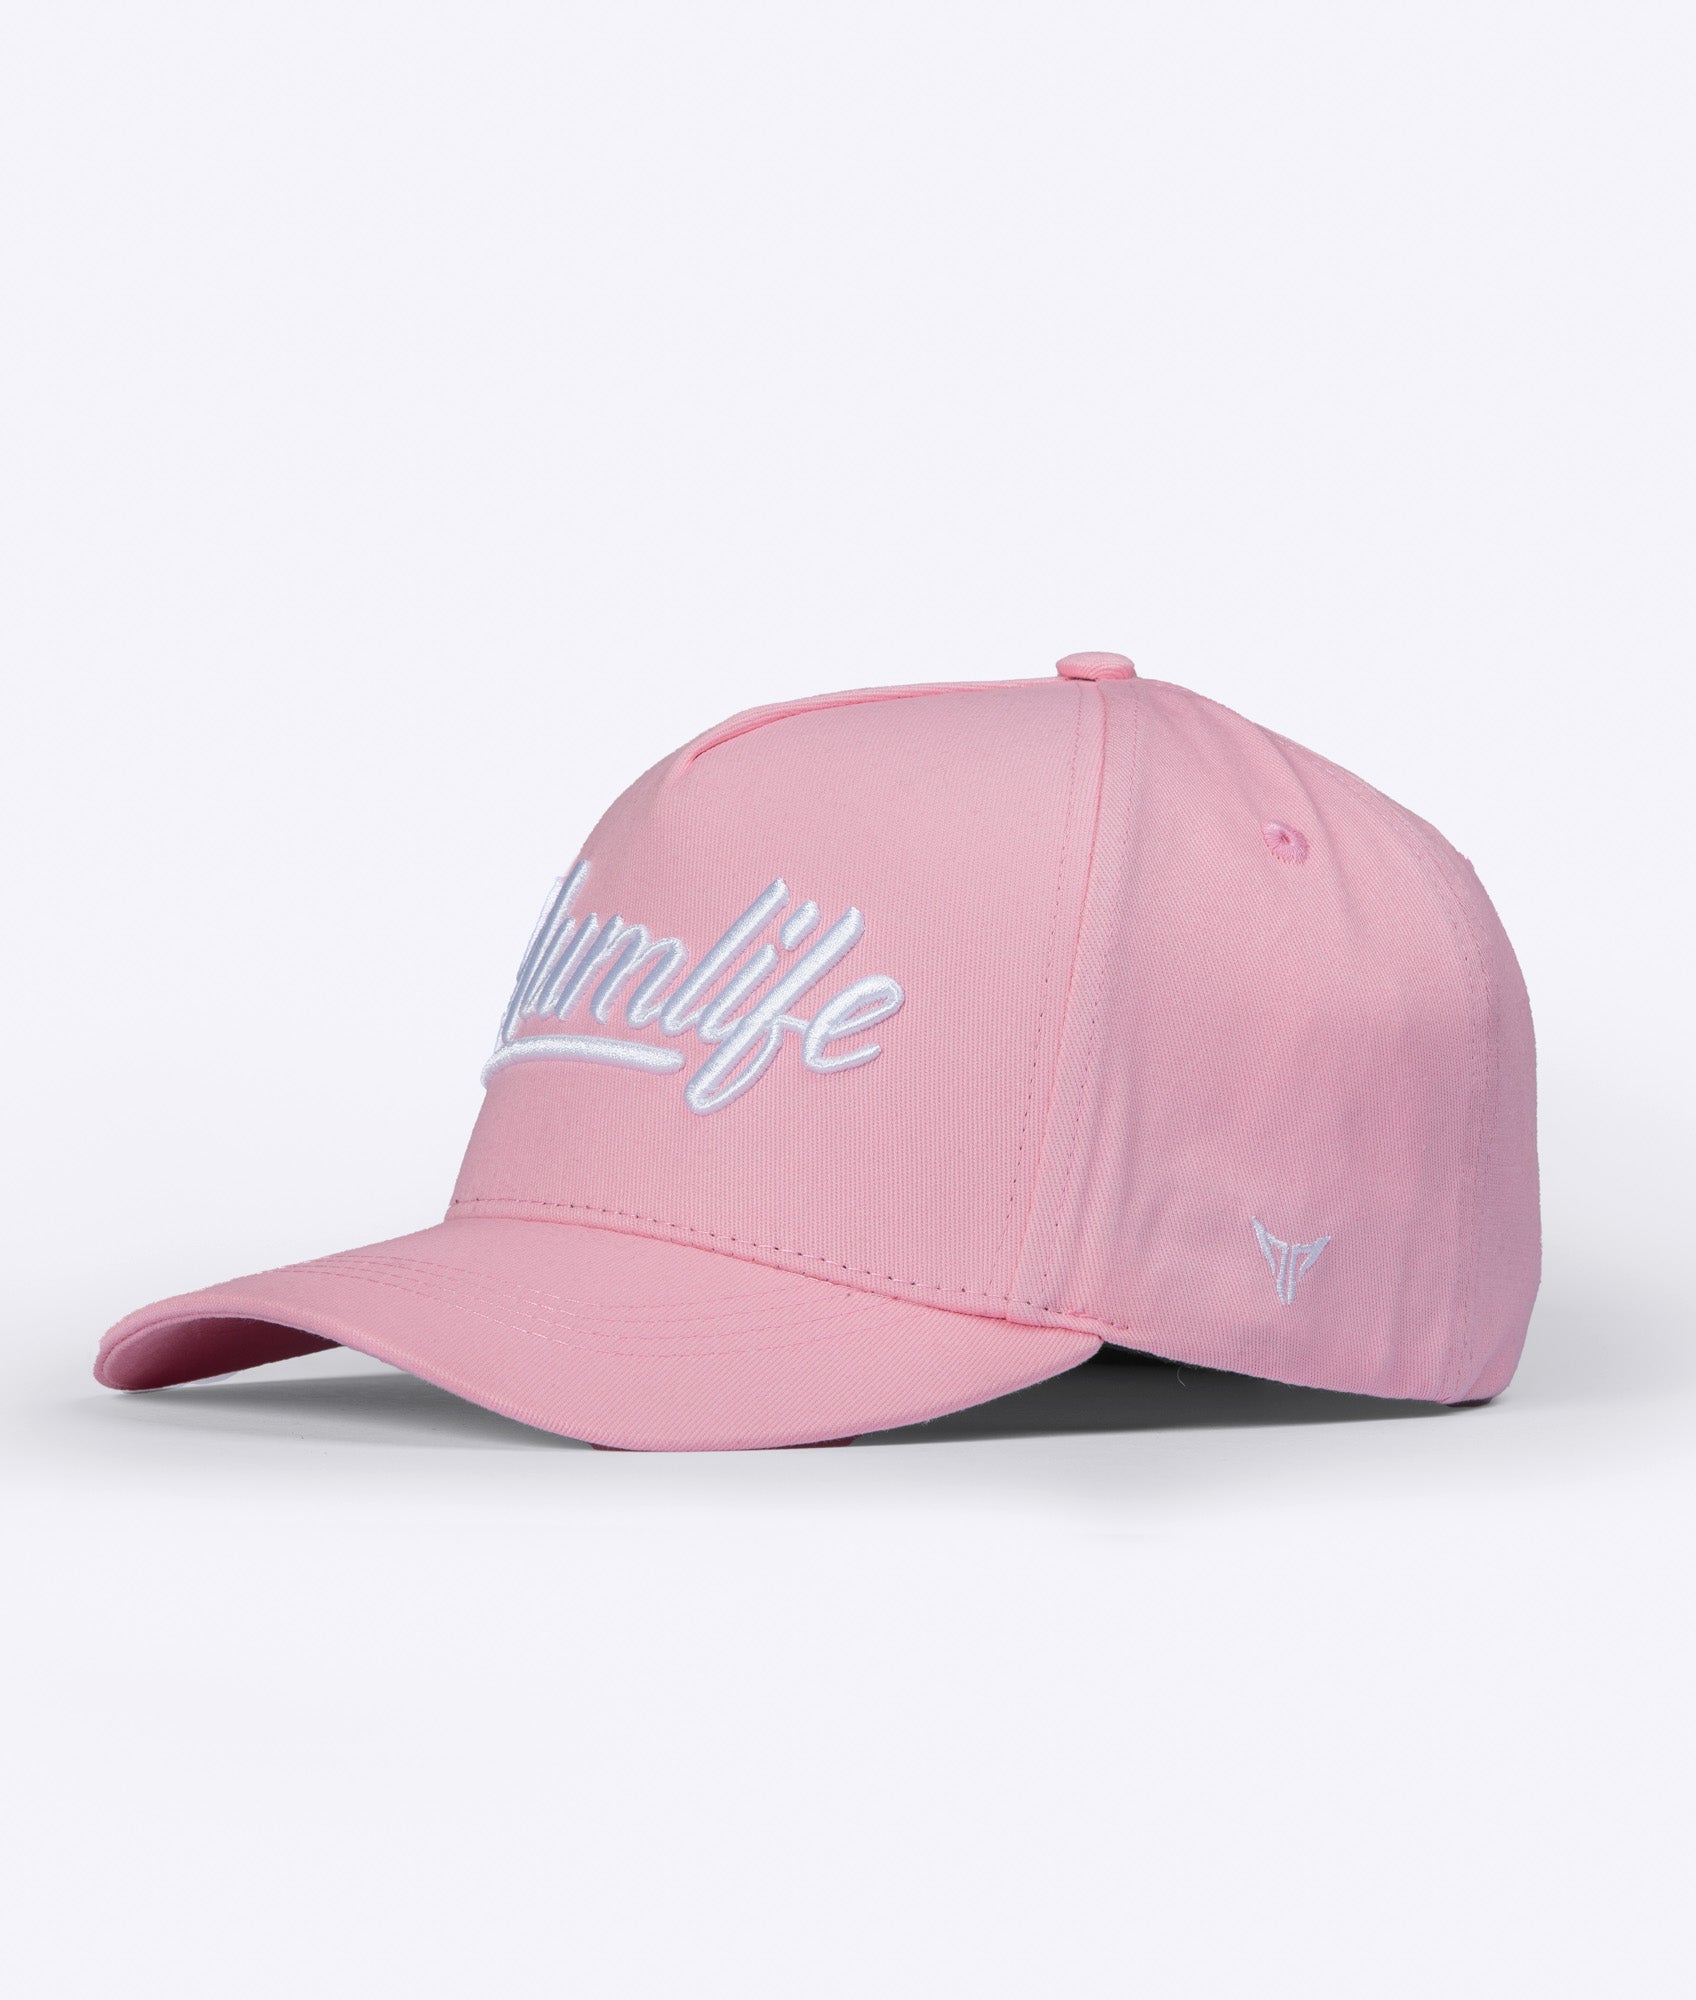 MumLife A-Frame Snapback - Pastel Pink